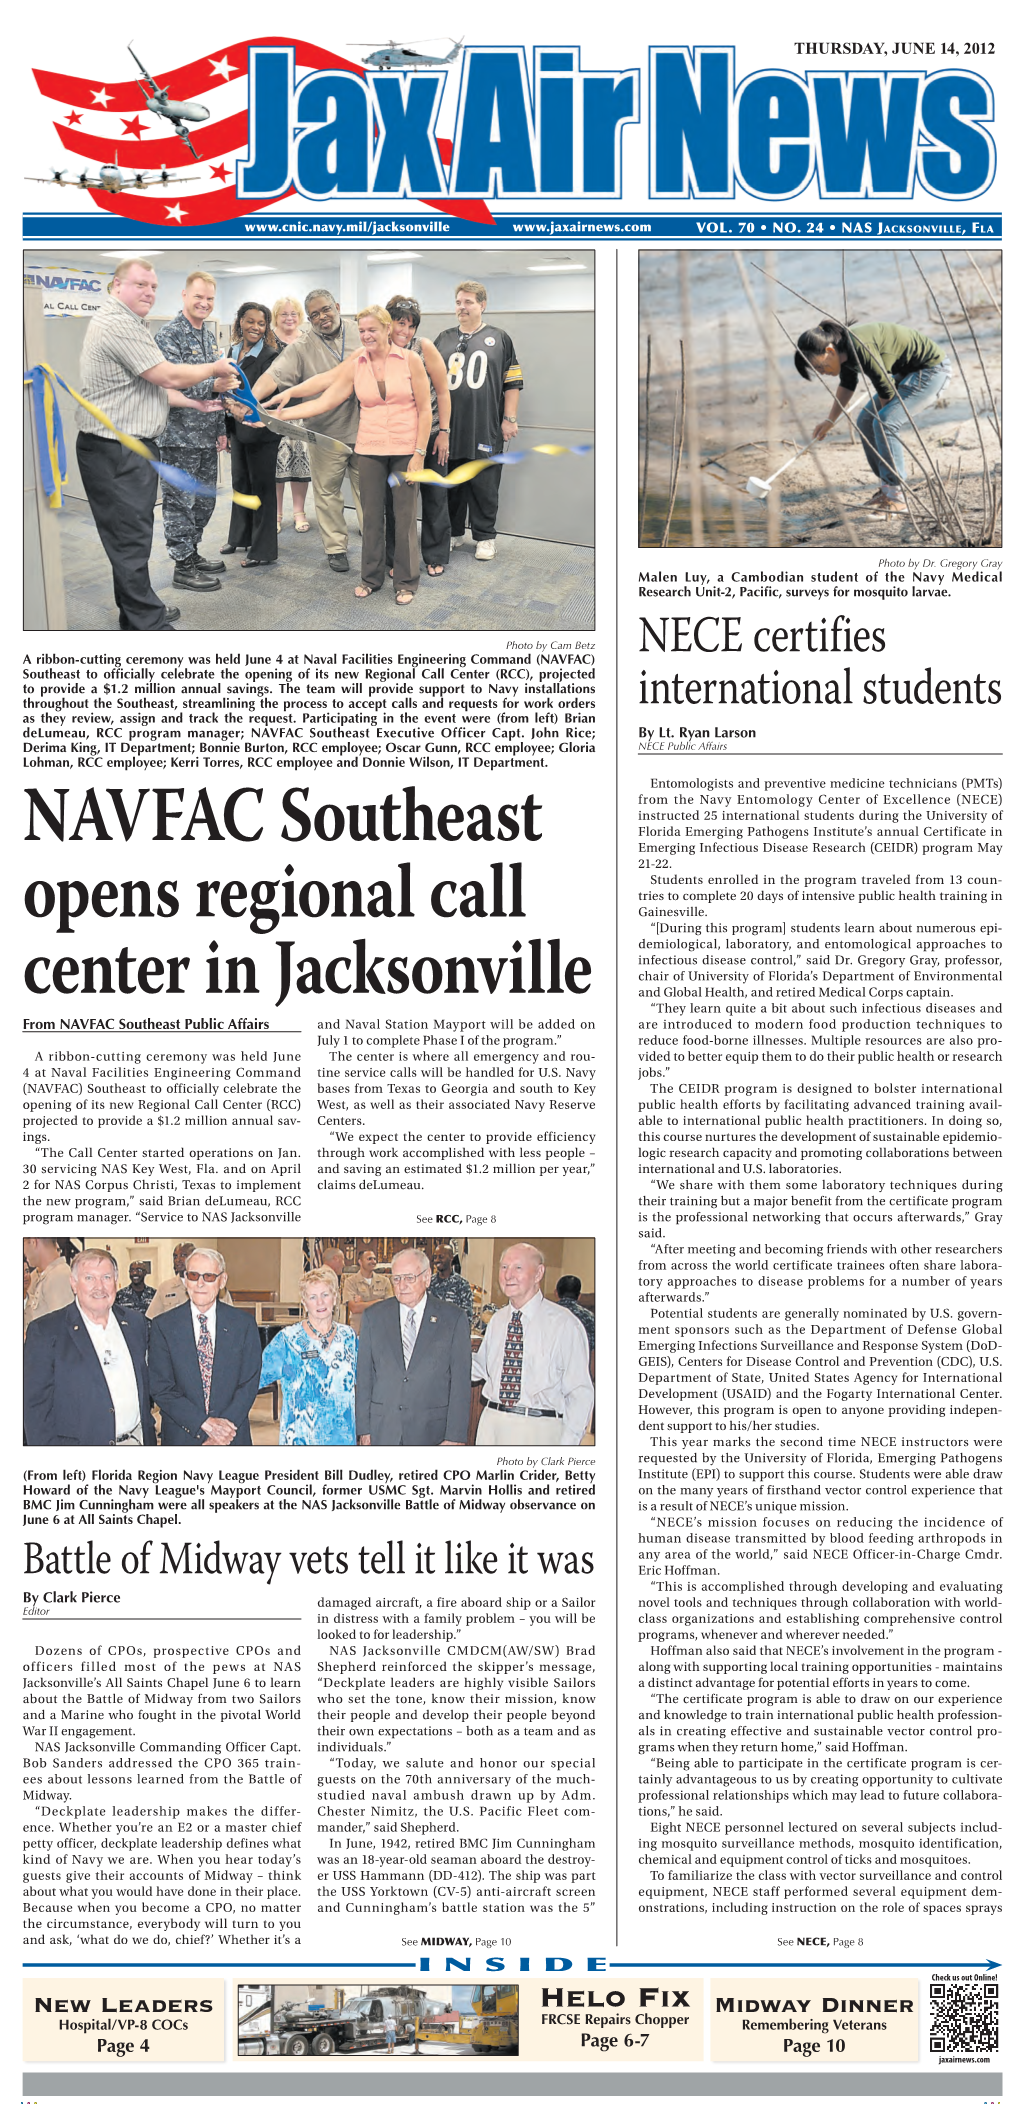 NAVFAC Southeast Opens Regional Call Center in Jacksonville